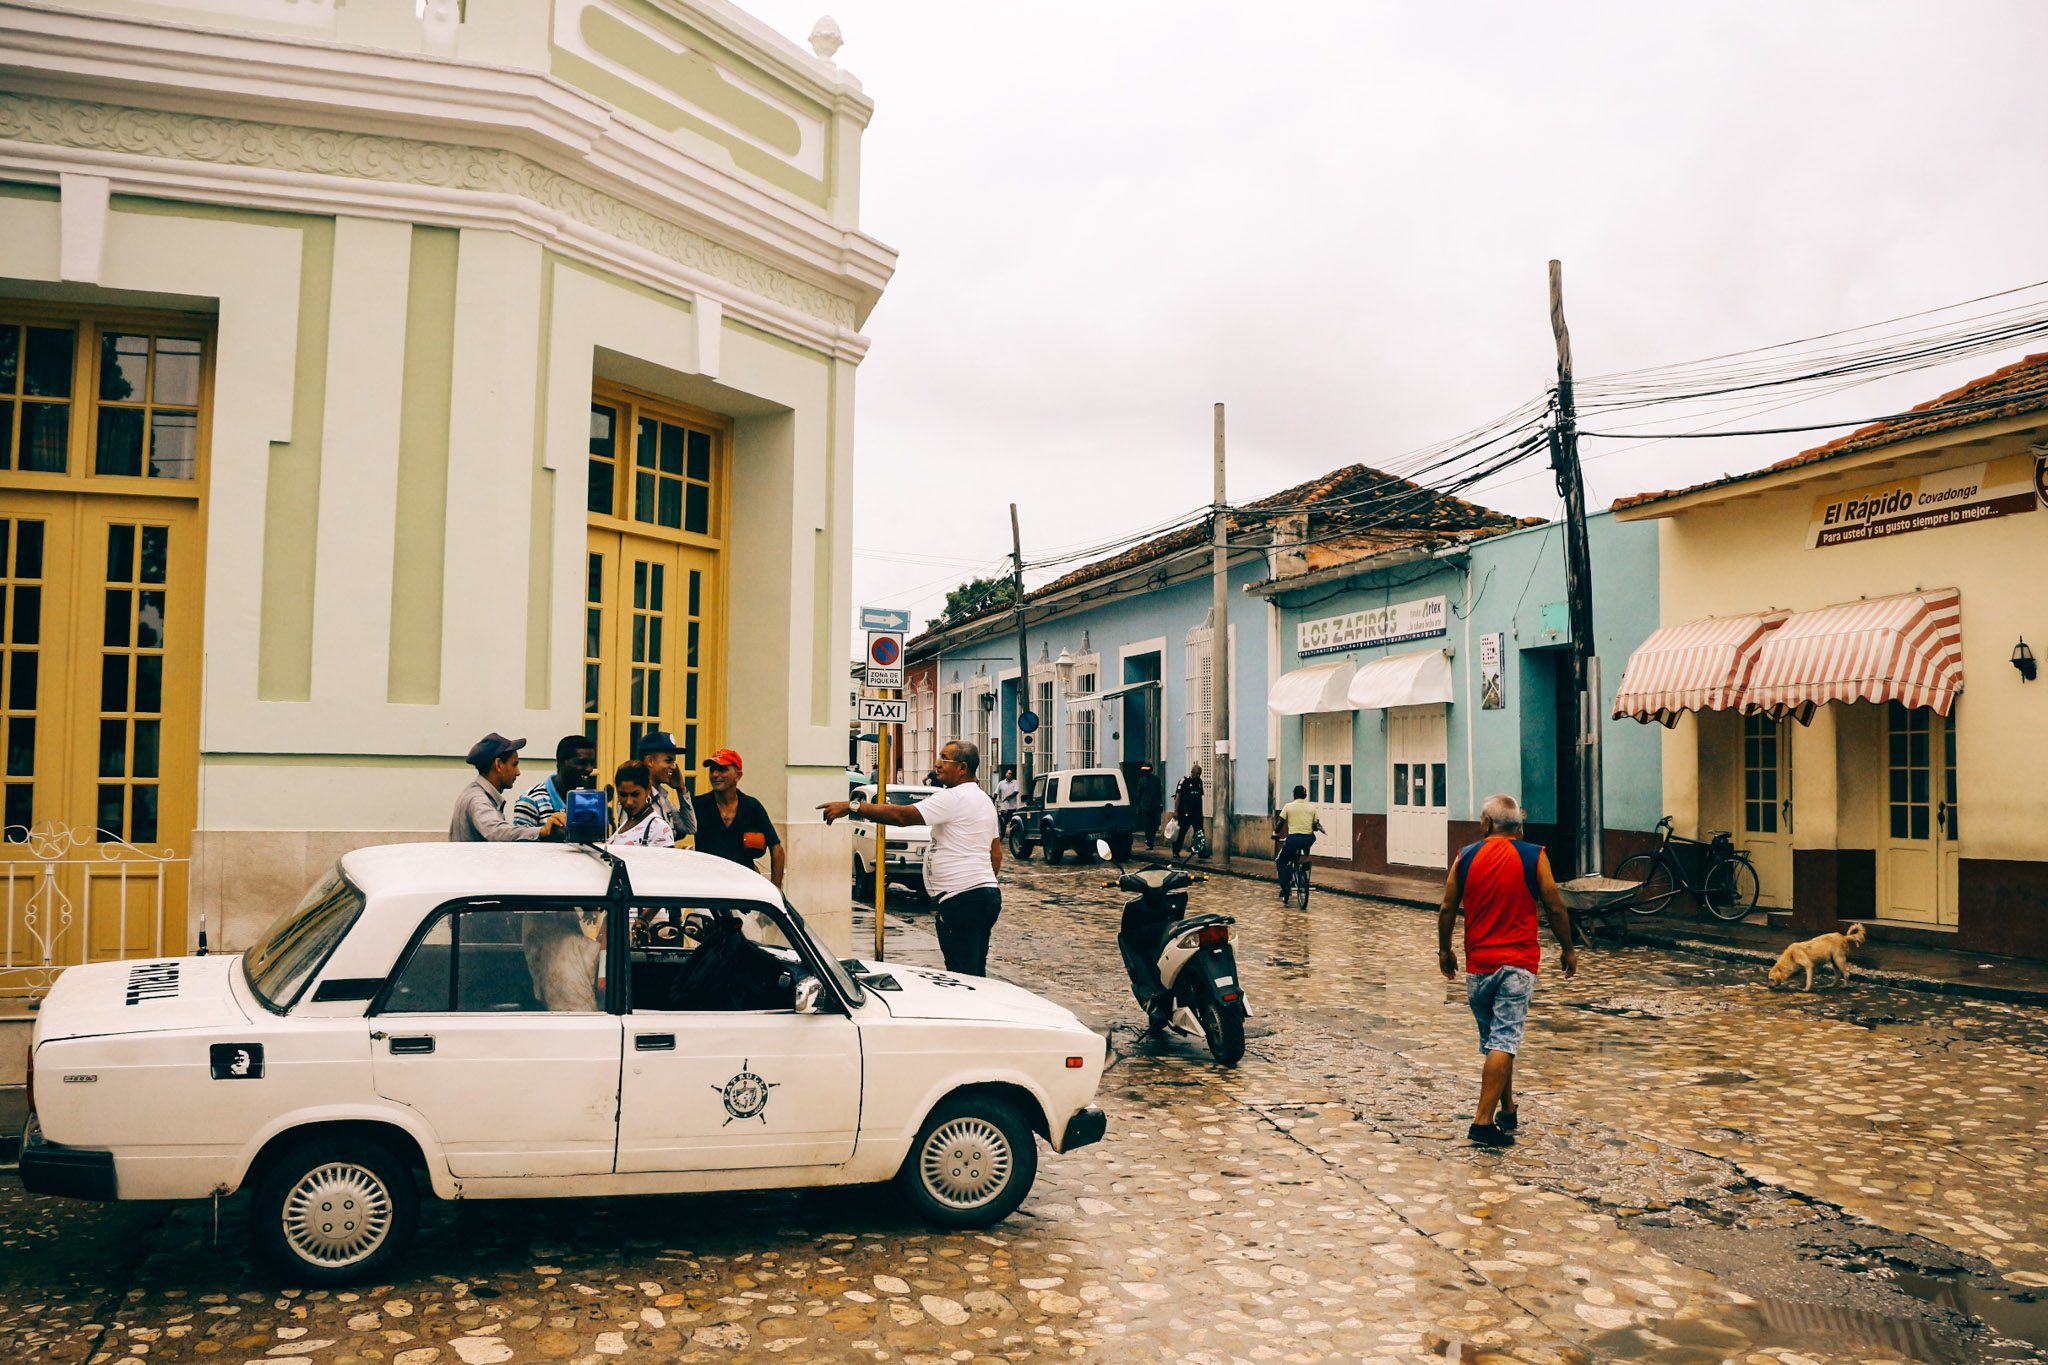 Calle Jesús María em Trinidad, Cuba, onde trocamos dinheiro